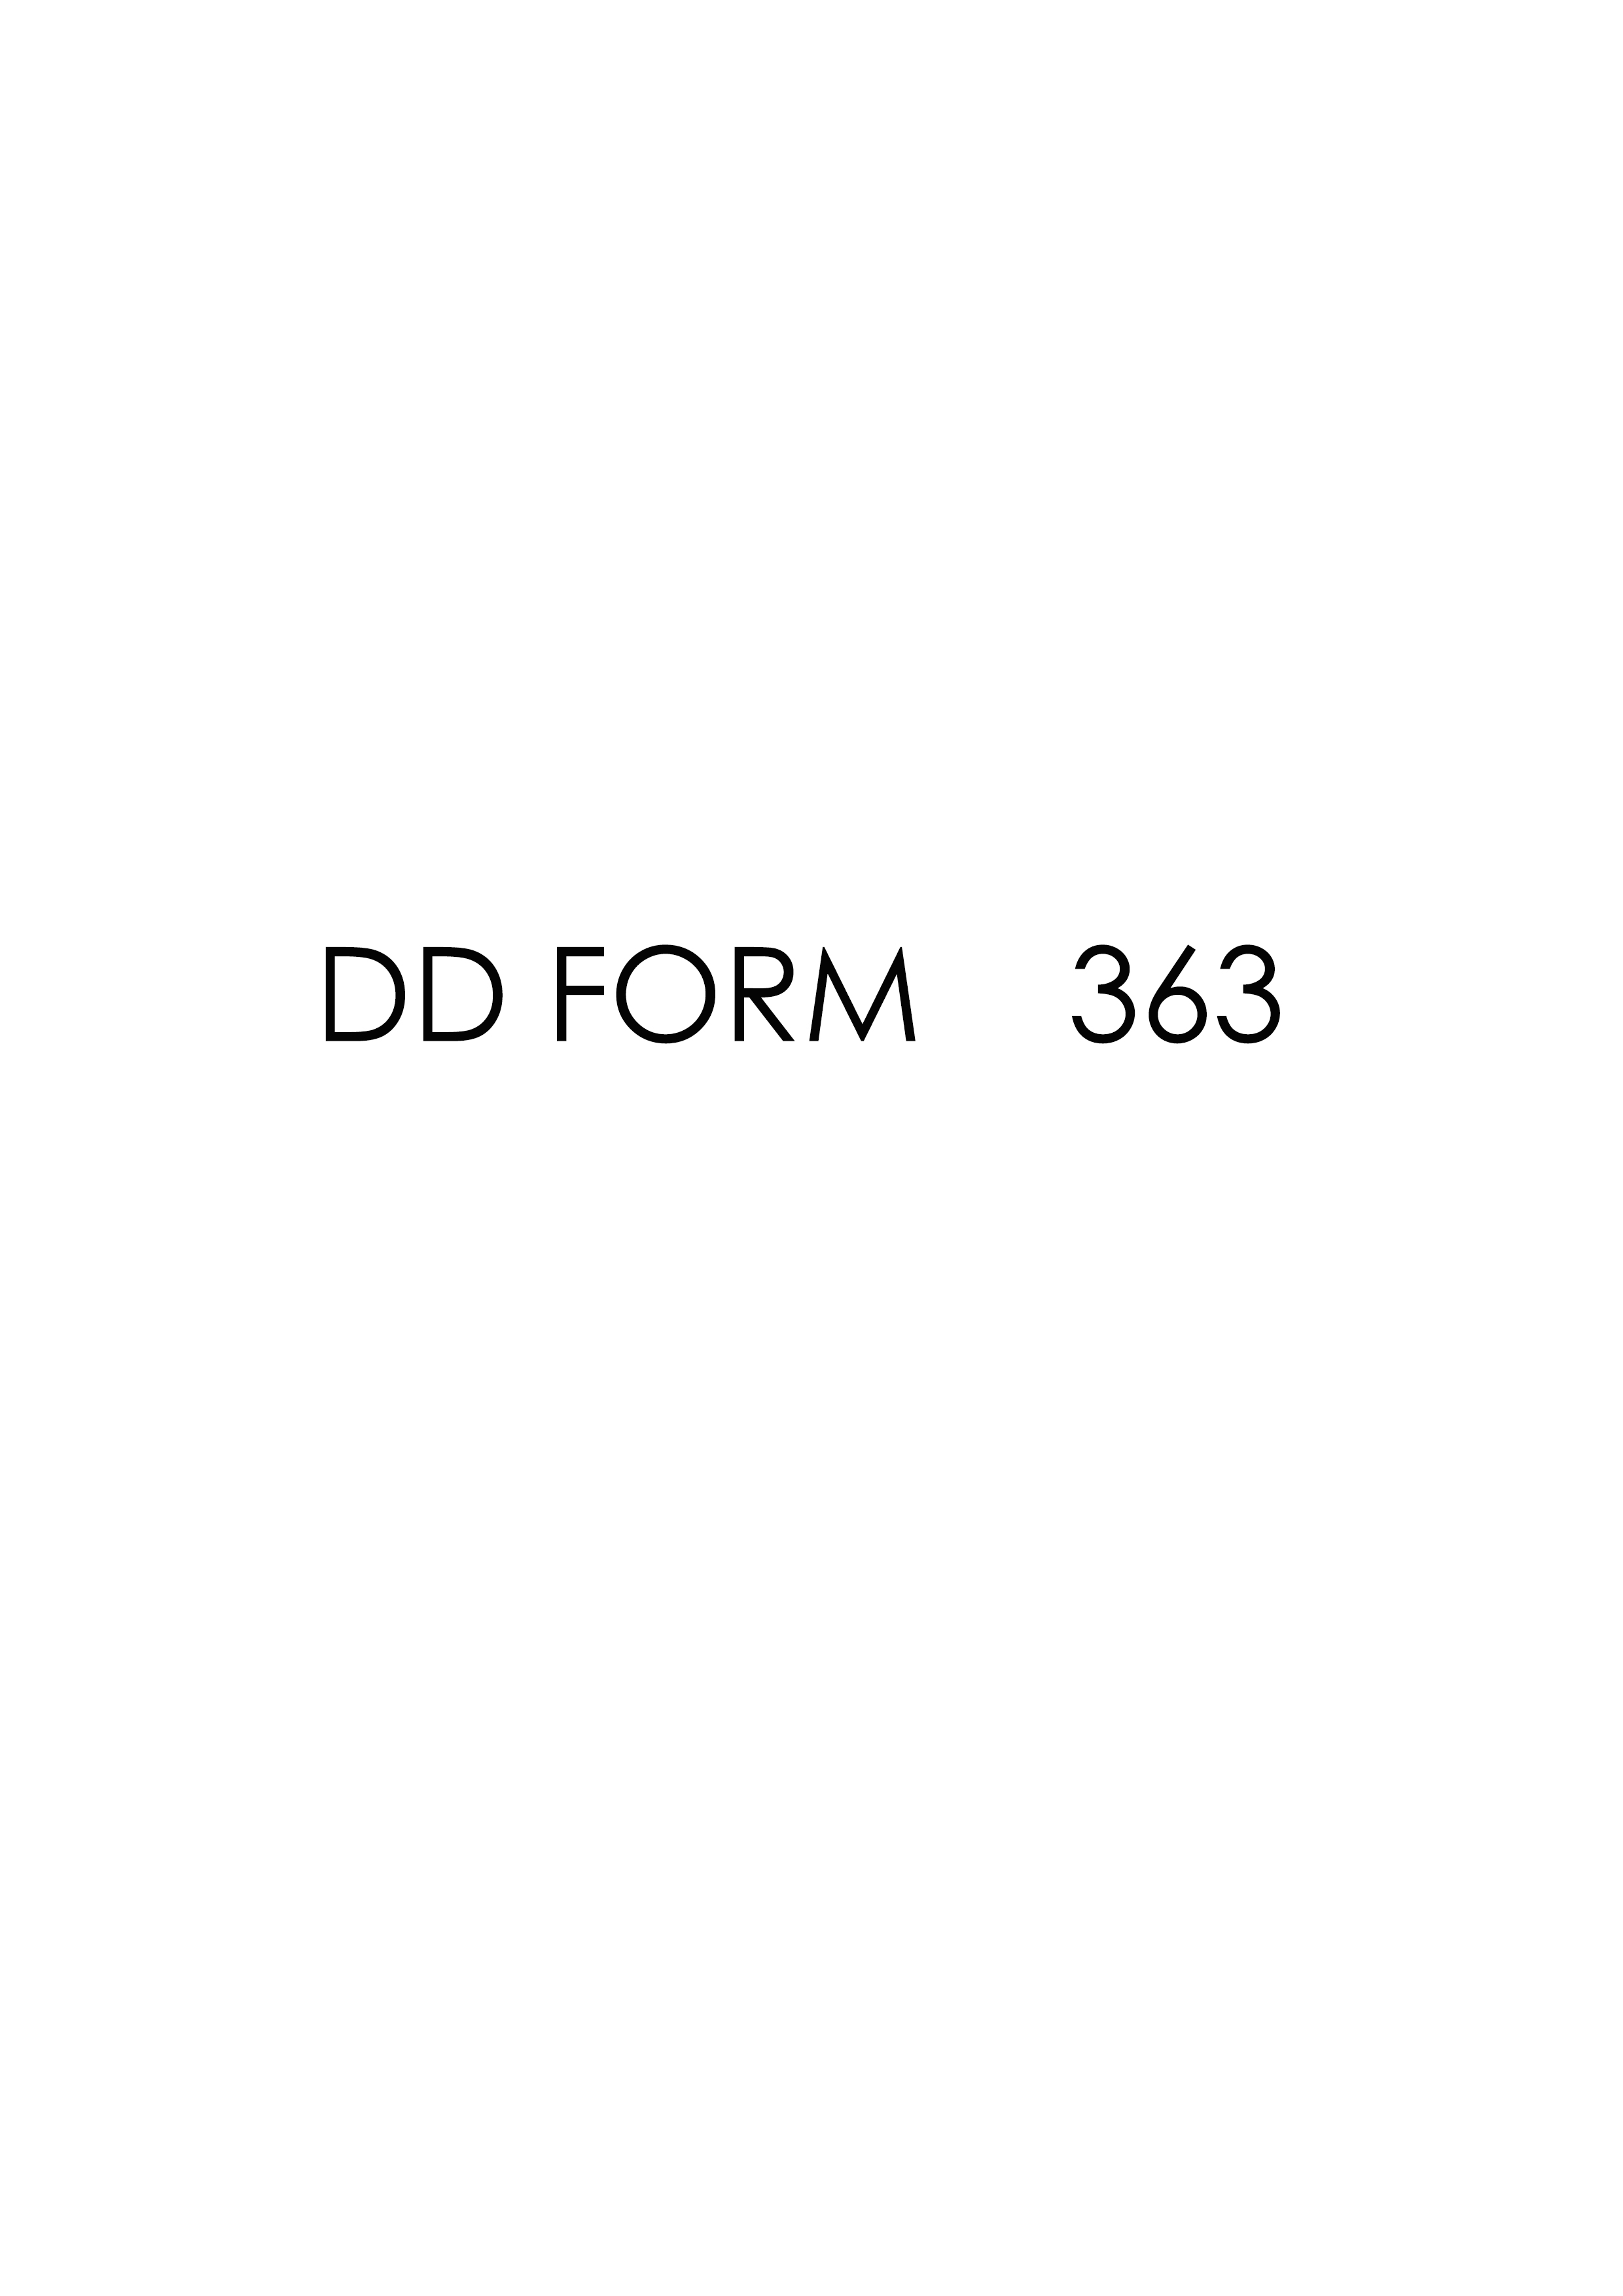 Download dd form 363